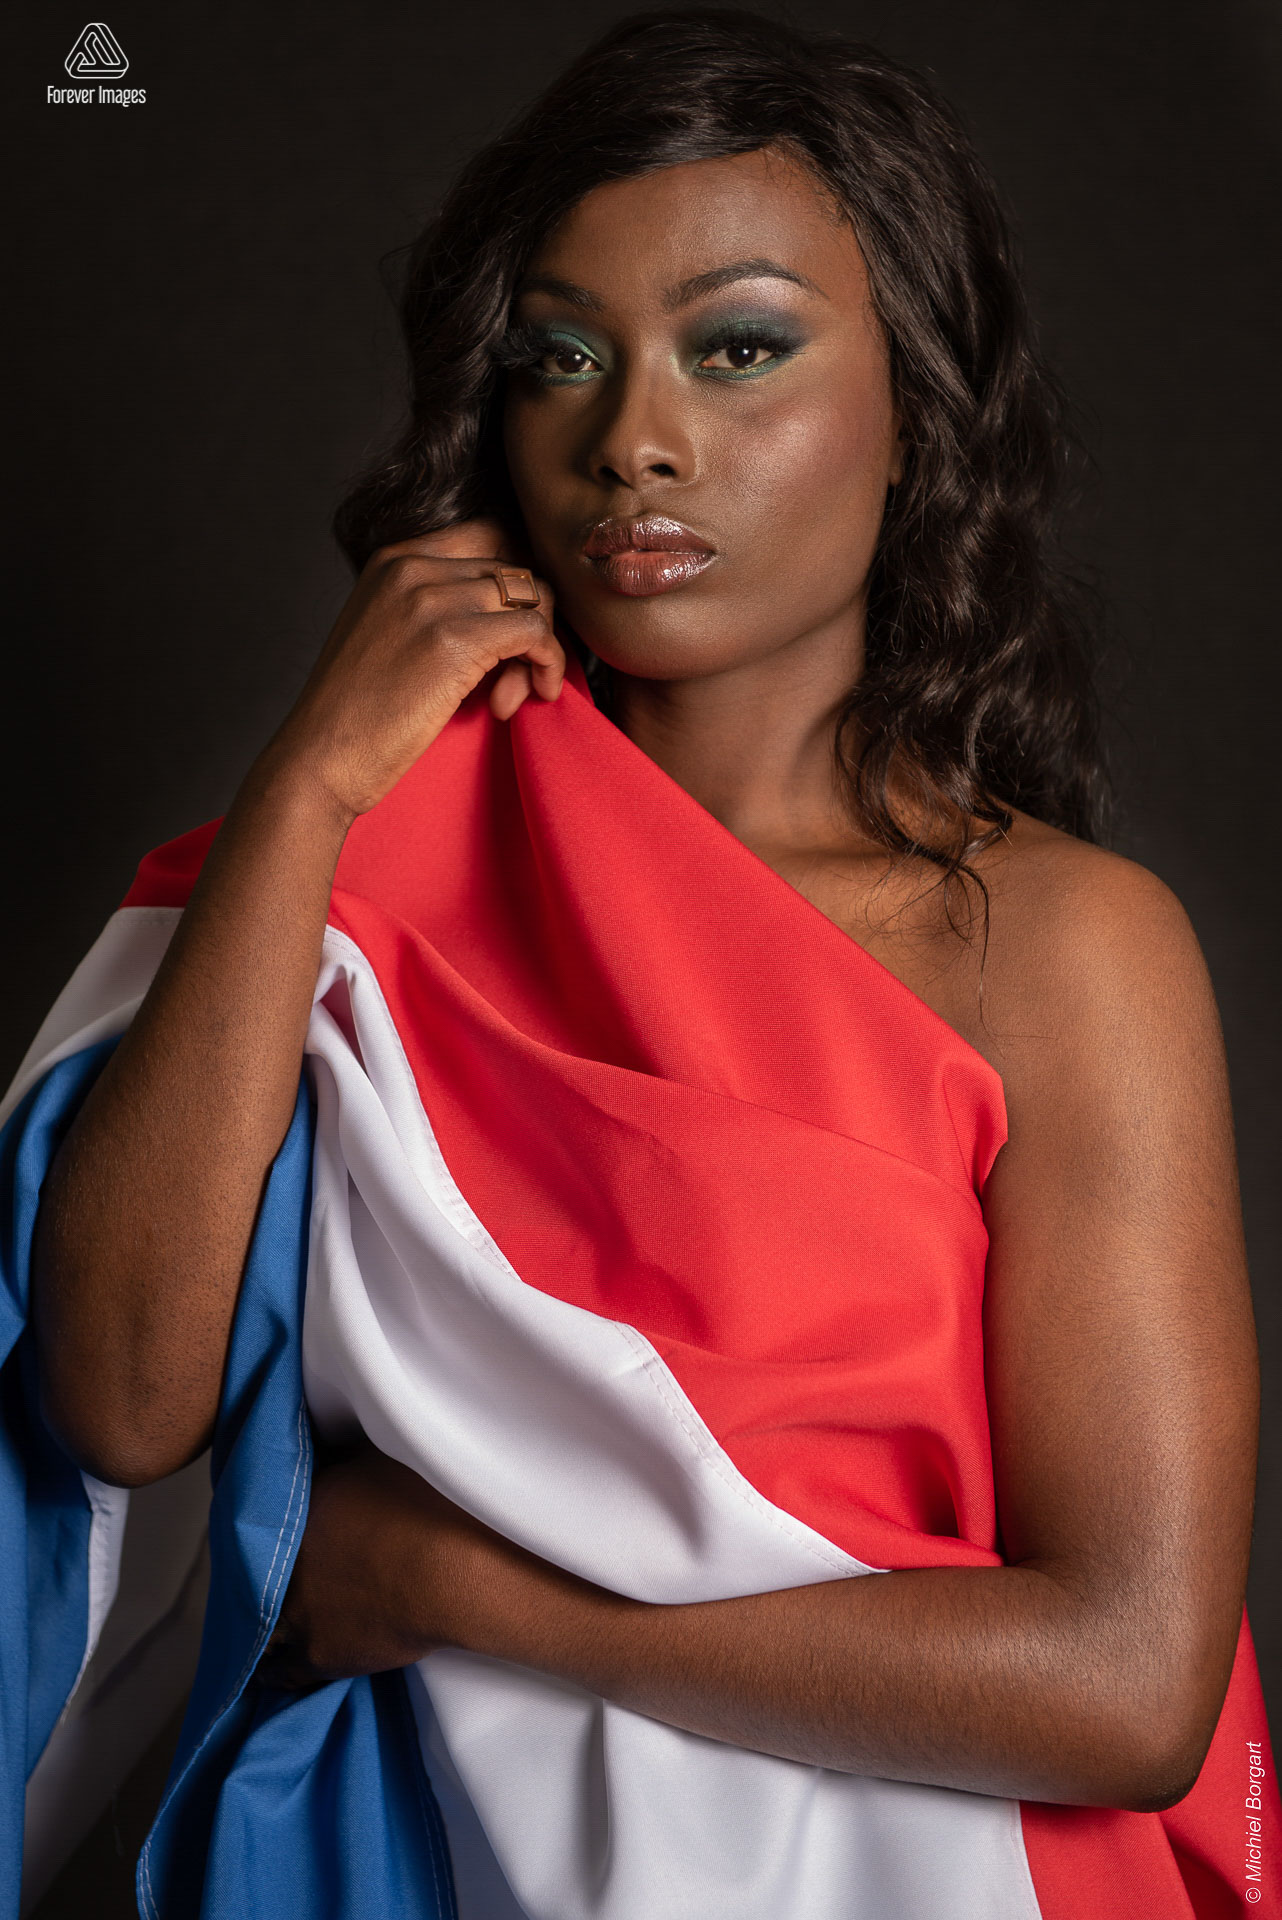 Portretfoto met nationale vlag | Stephanie Omogun Miss Eco Netherlands Vicky Foundation | Portretfotograaf Michiel Borgart - Forever Images.